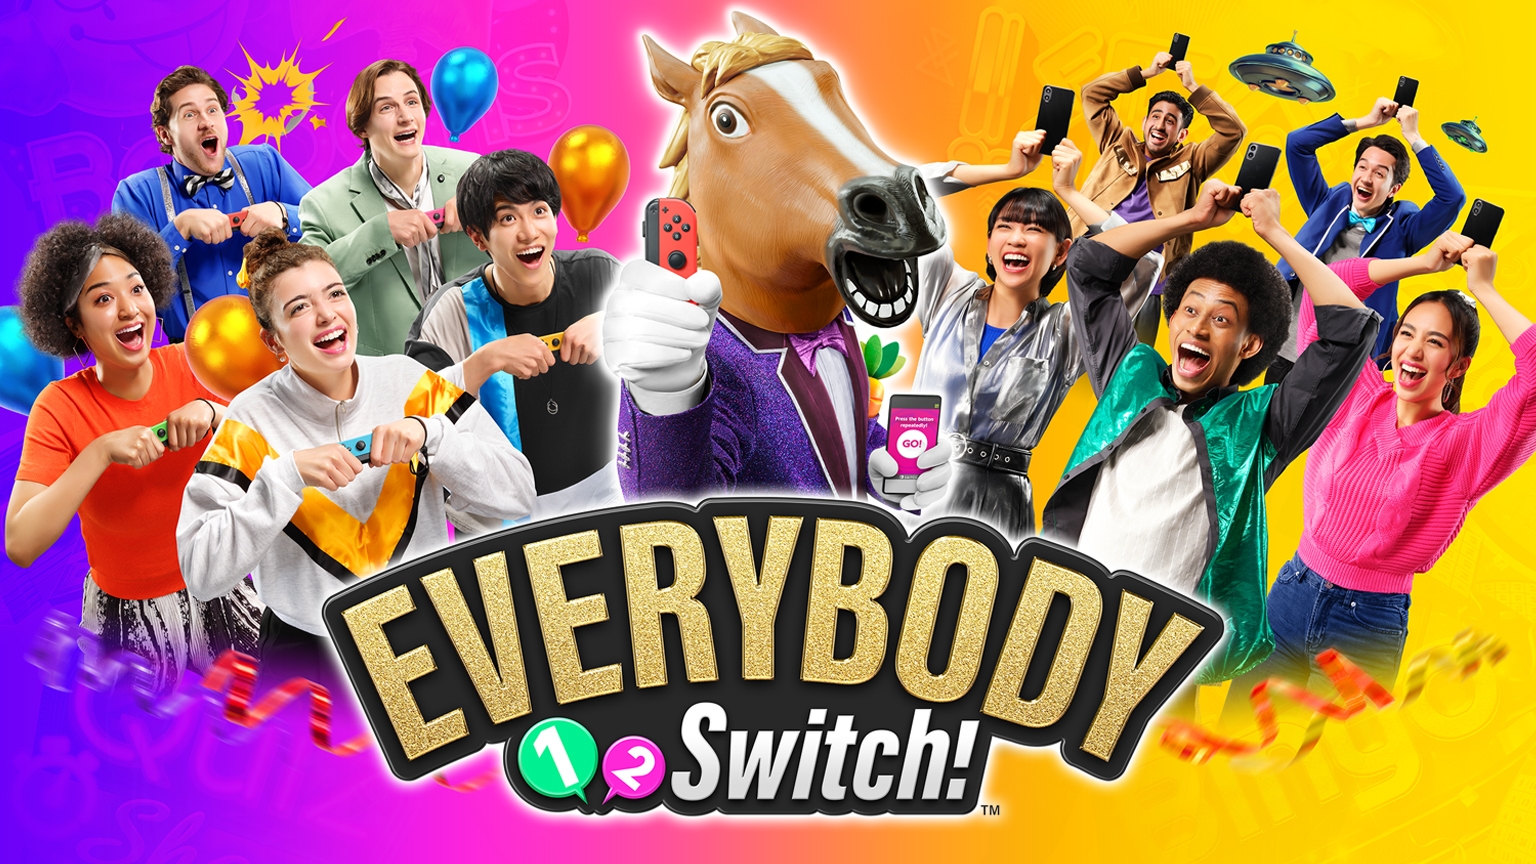 Everybody 1-2-Switch!™